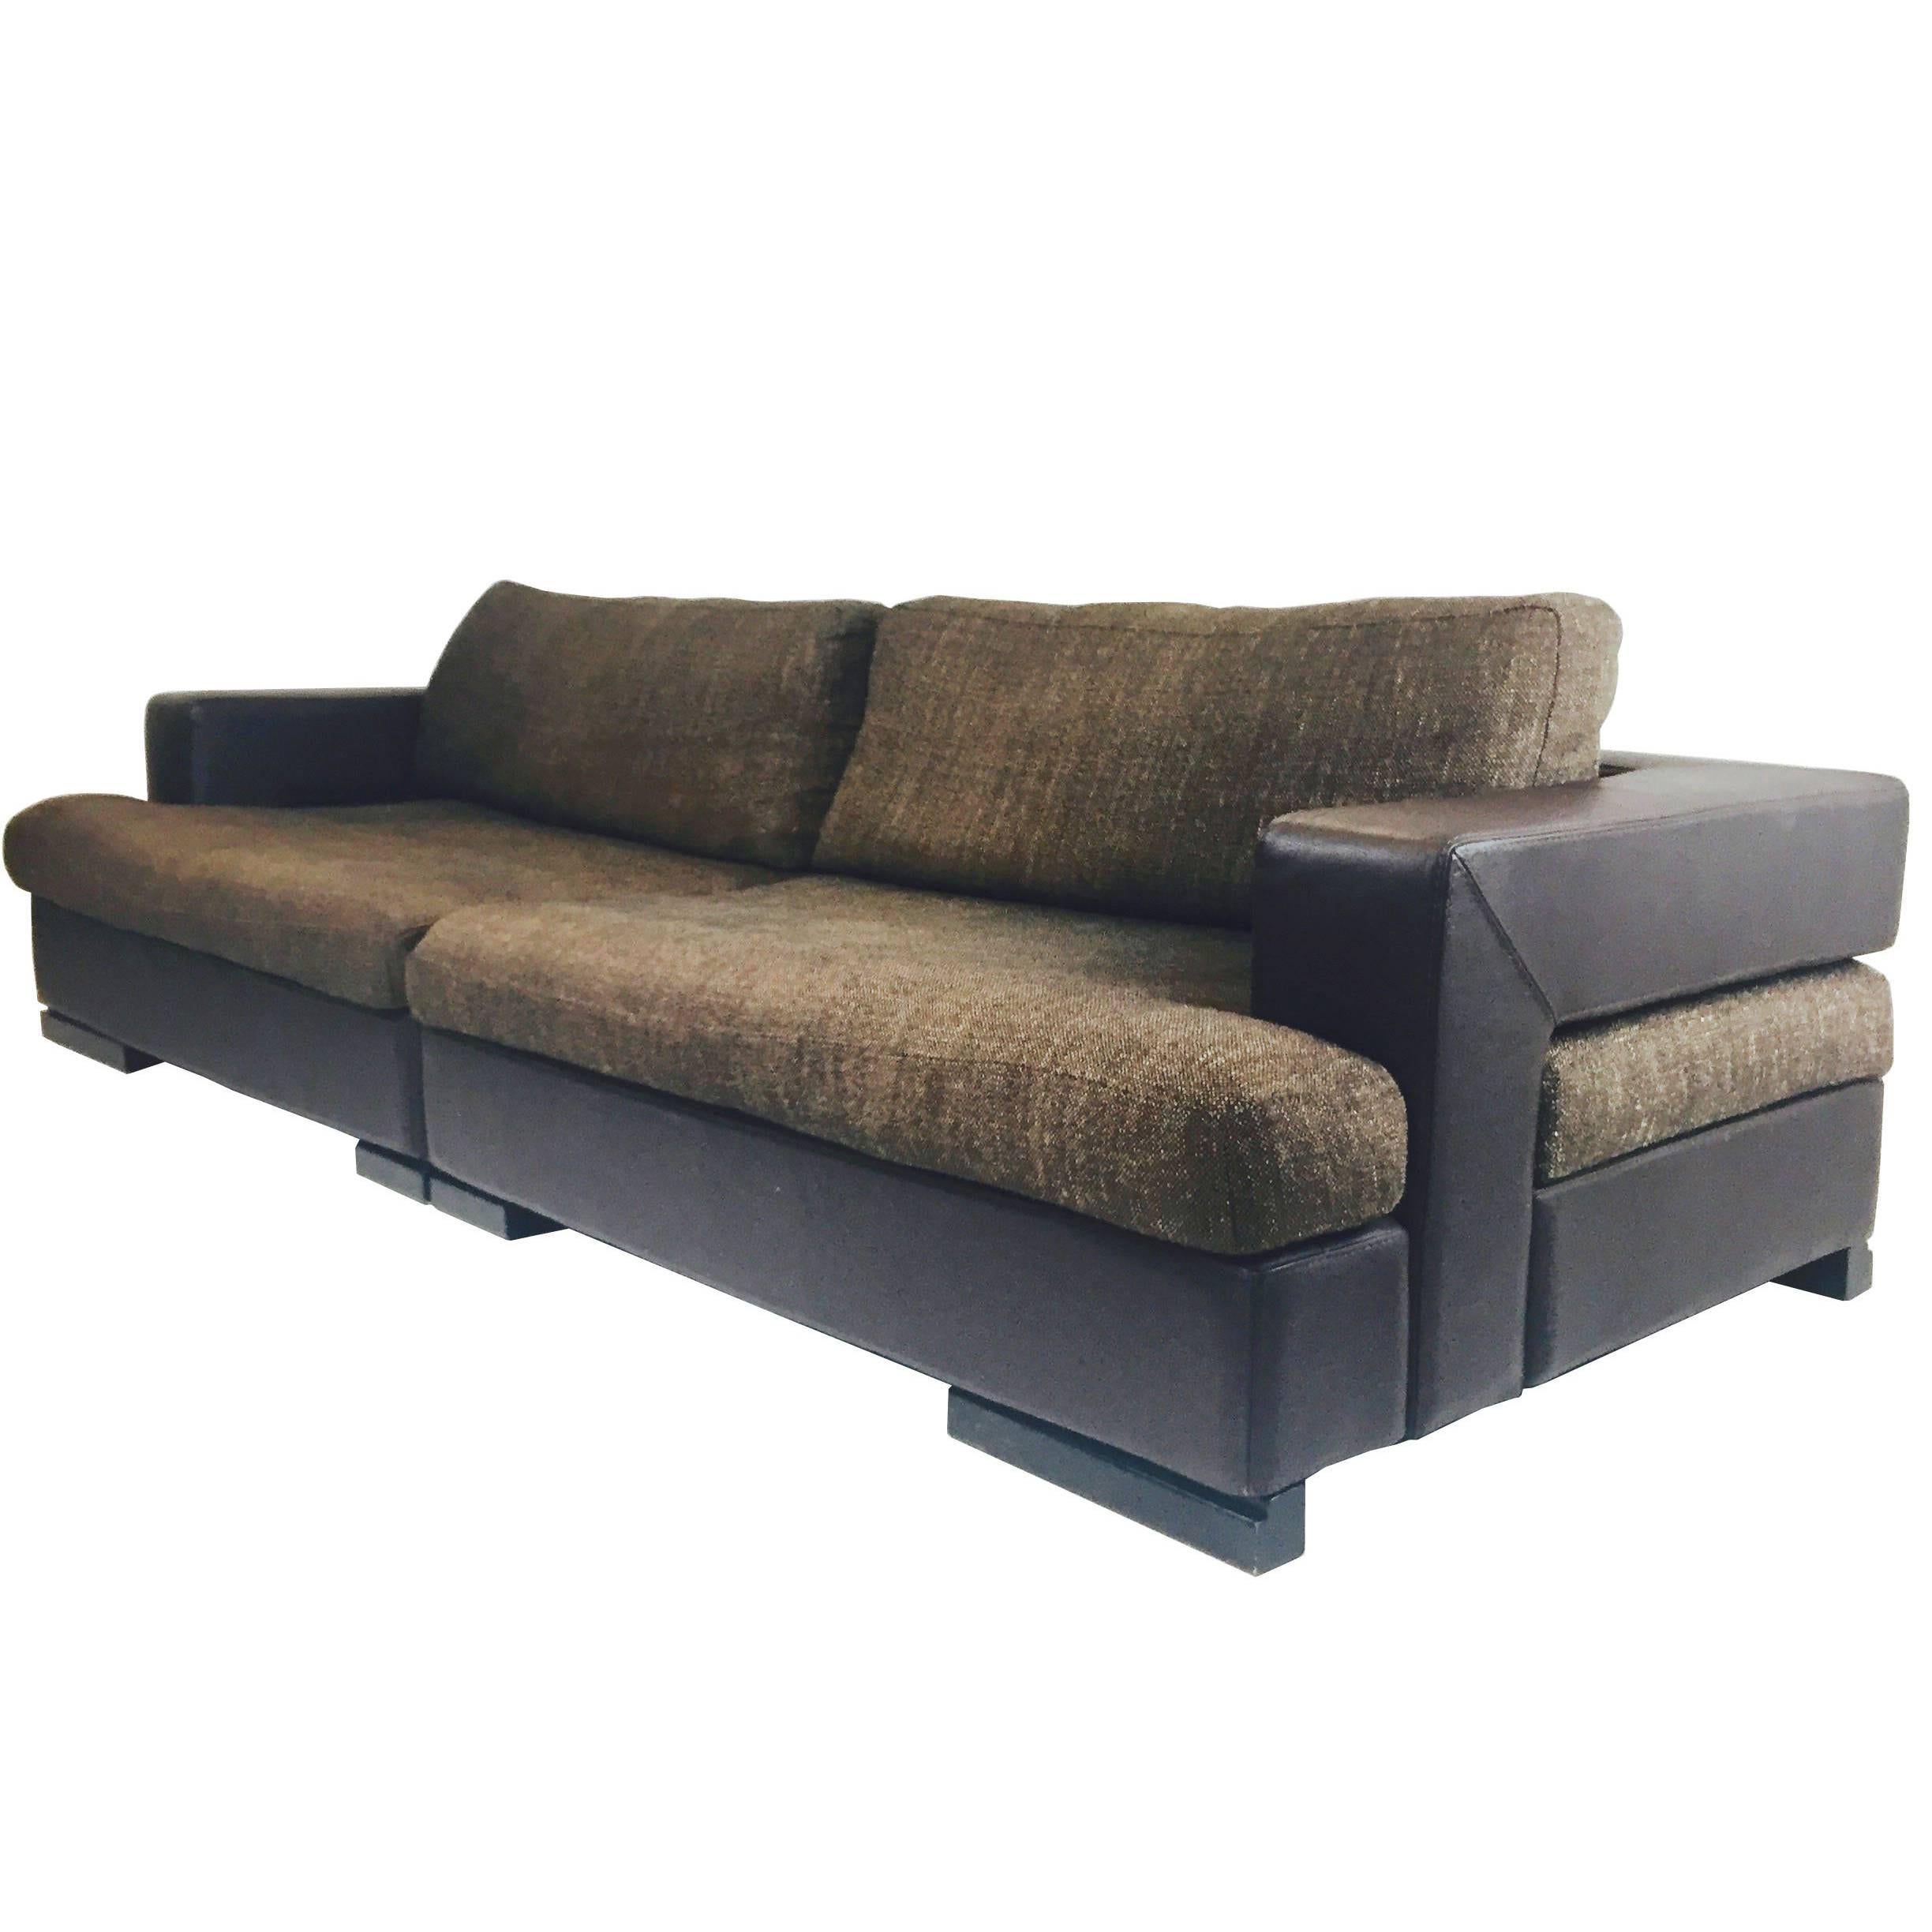 Roche Bobois Two-Piece Sectional Sofa